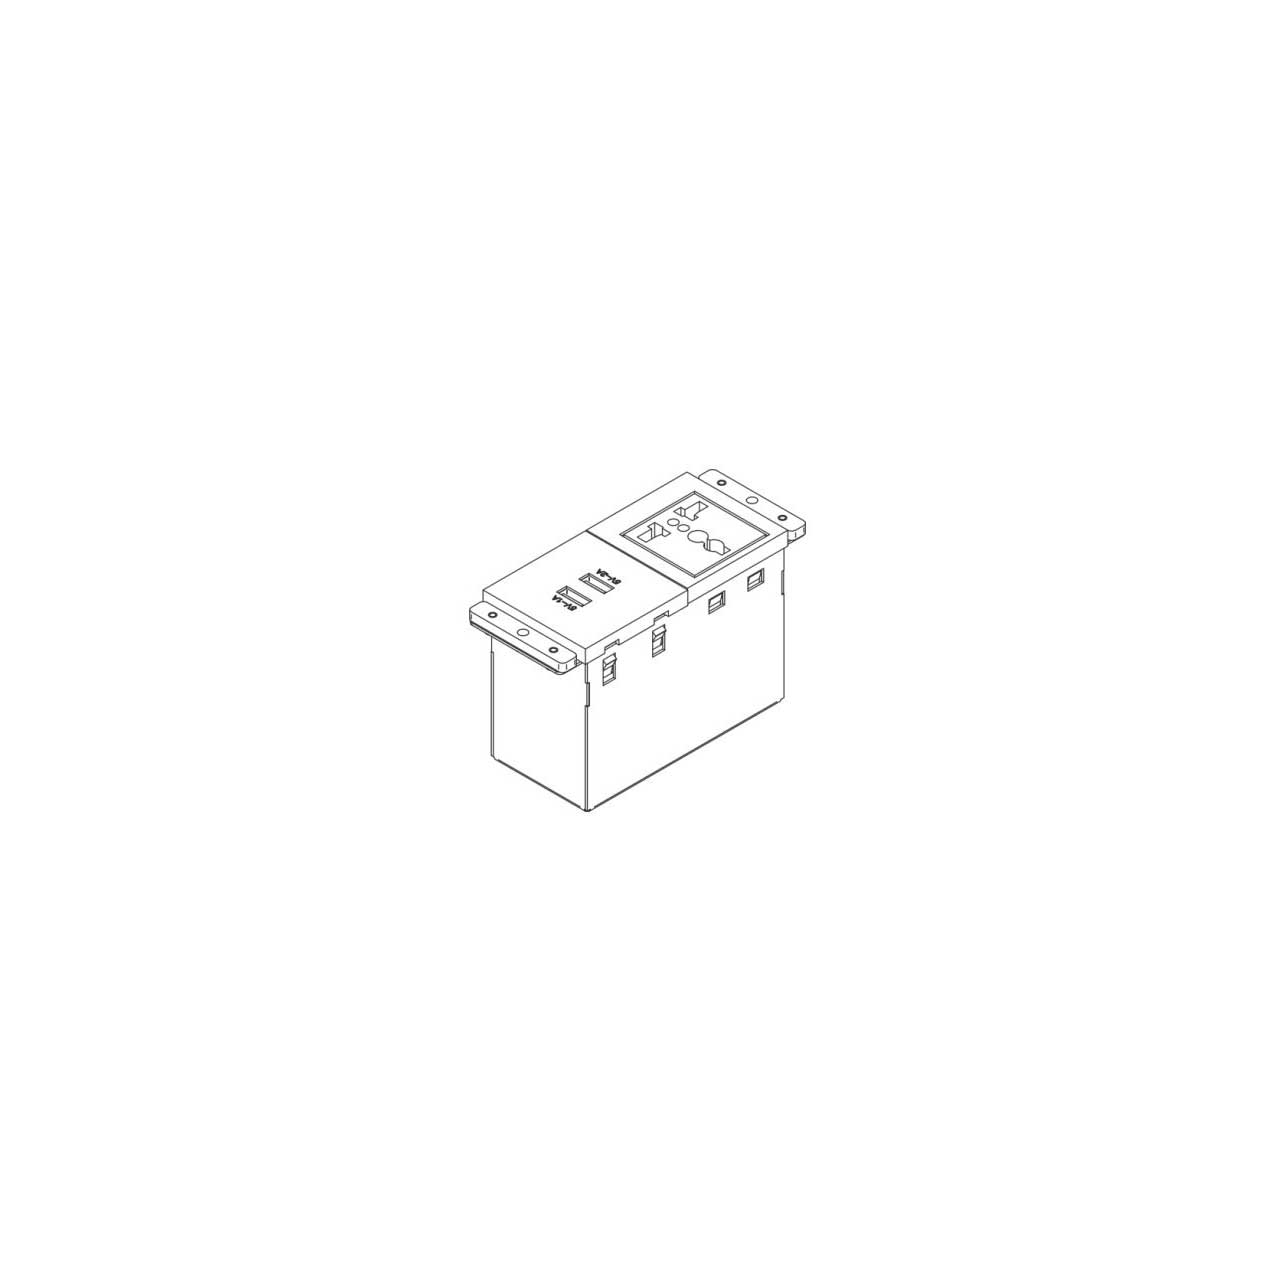 Kramer TS-2UC/U TBUS Dual Socket Module with 1 Universal AC Power Socket and 2 USB Charging Ports 91-000147